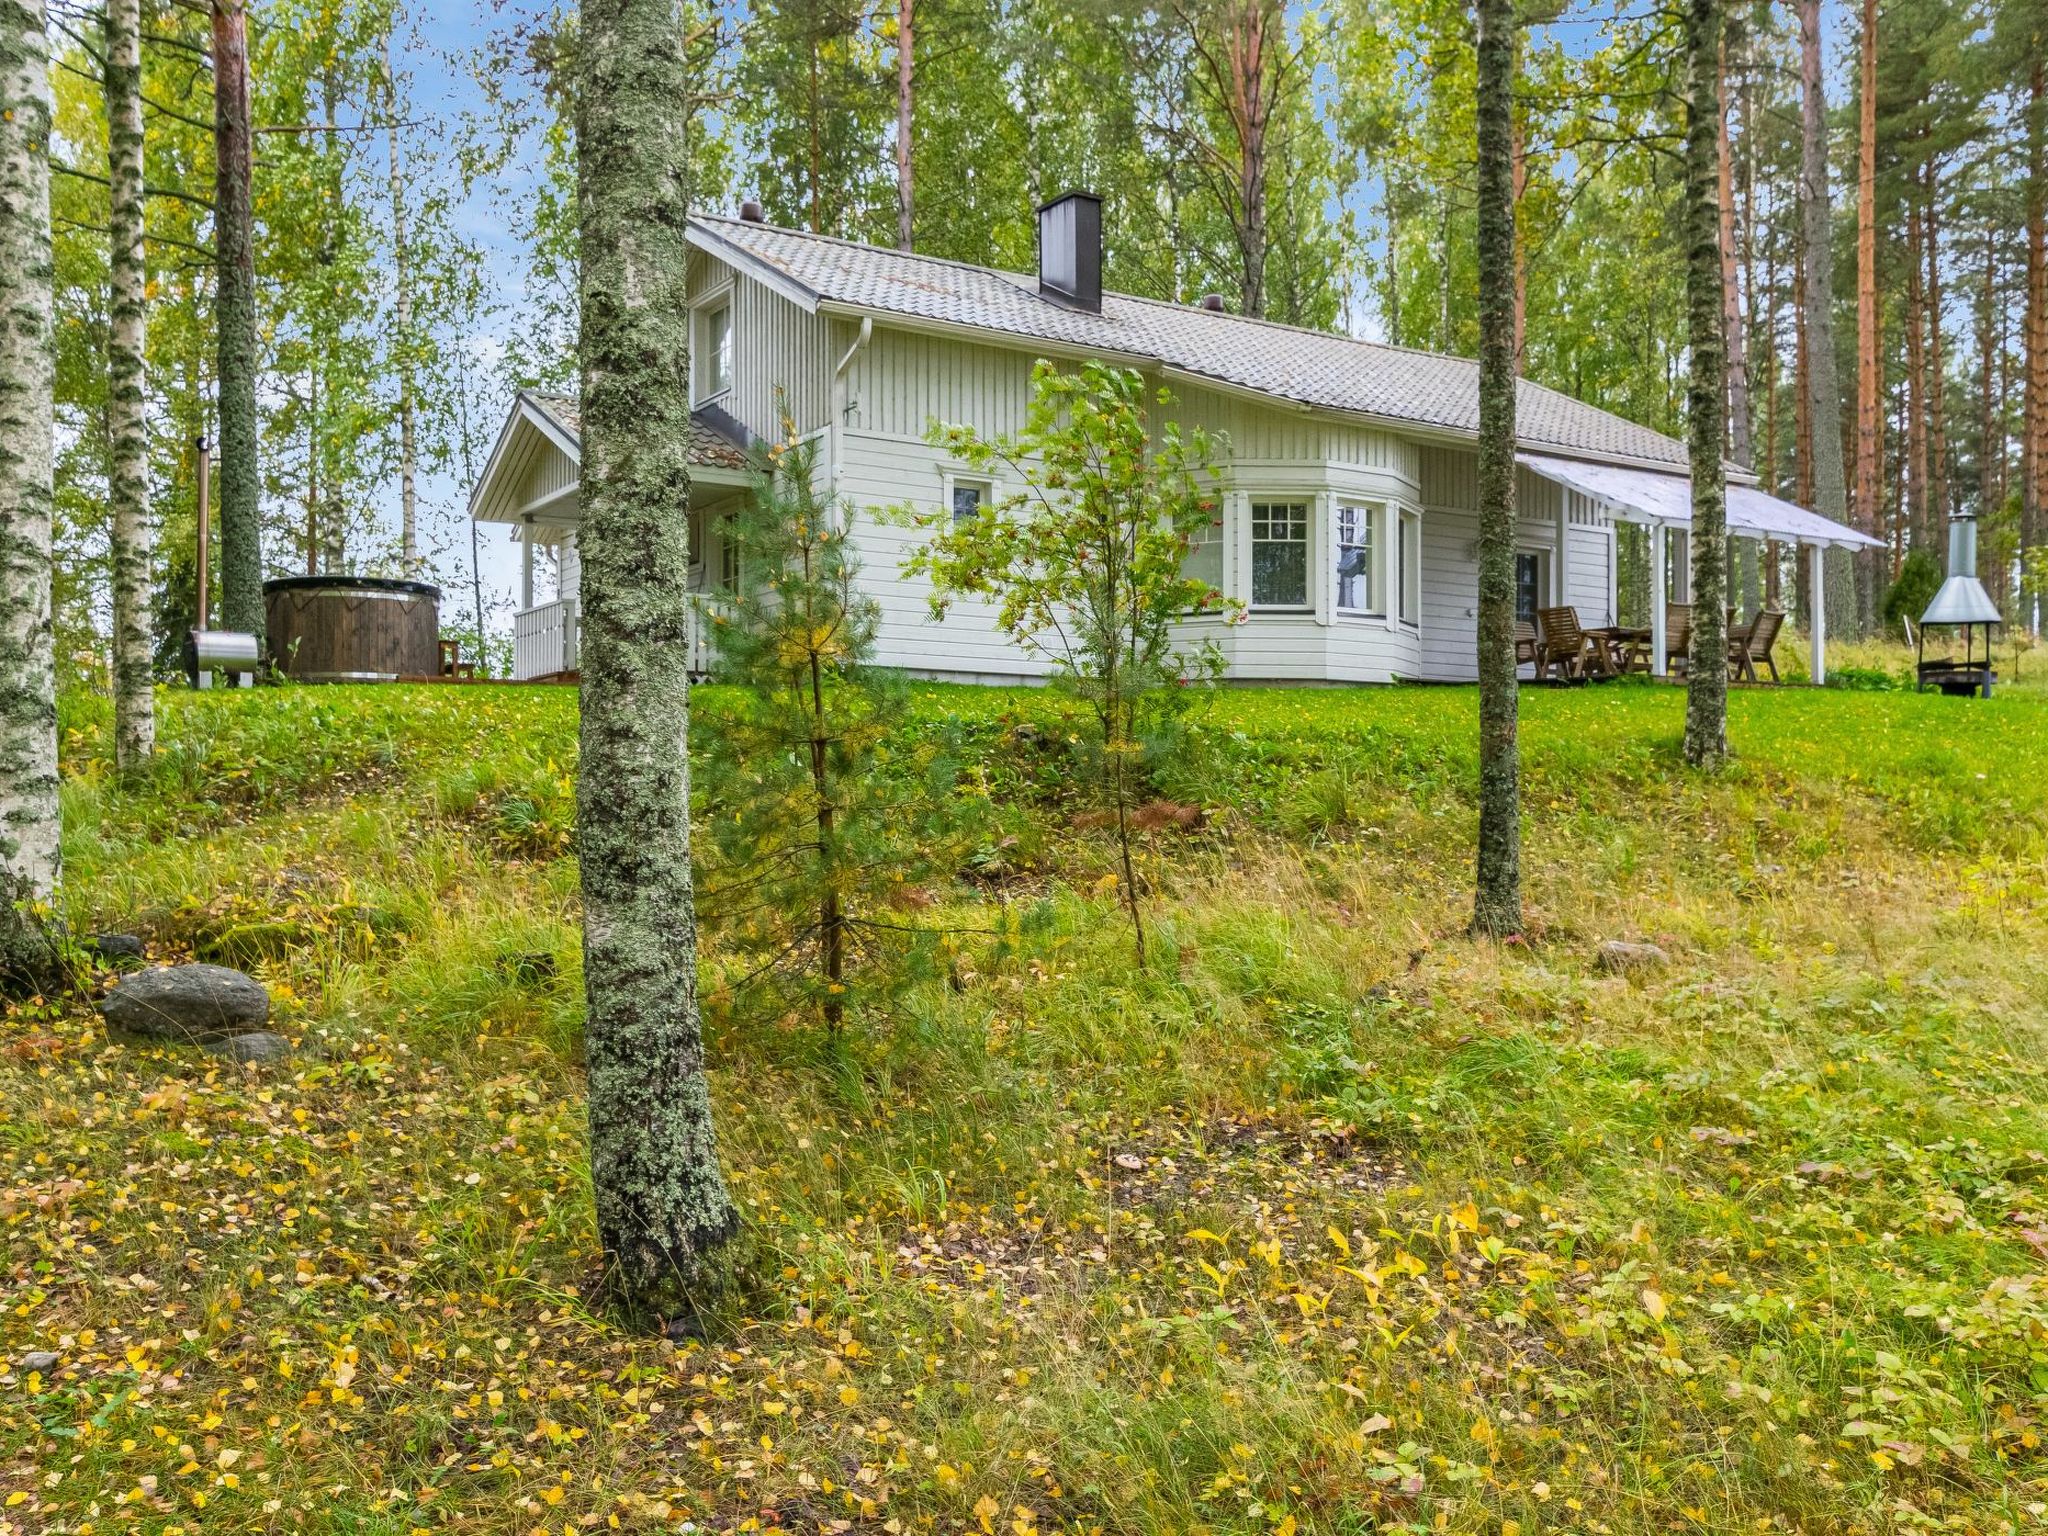 Photo 6 - 3 bedroom House in Savonlinna with sauna